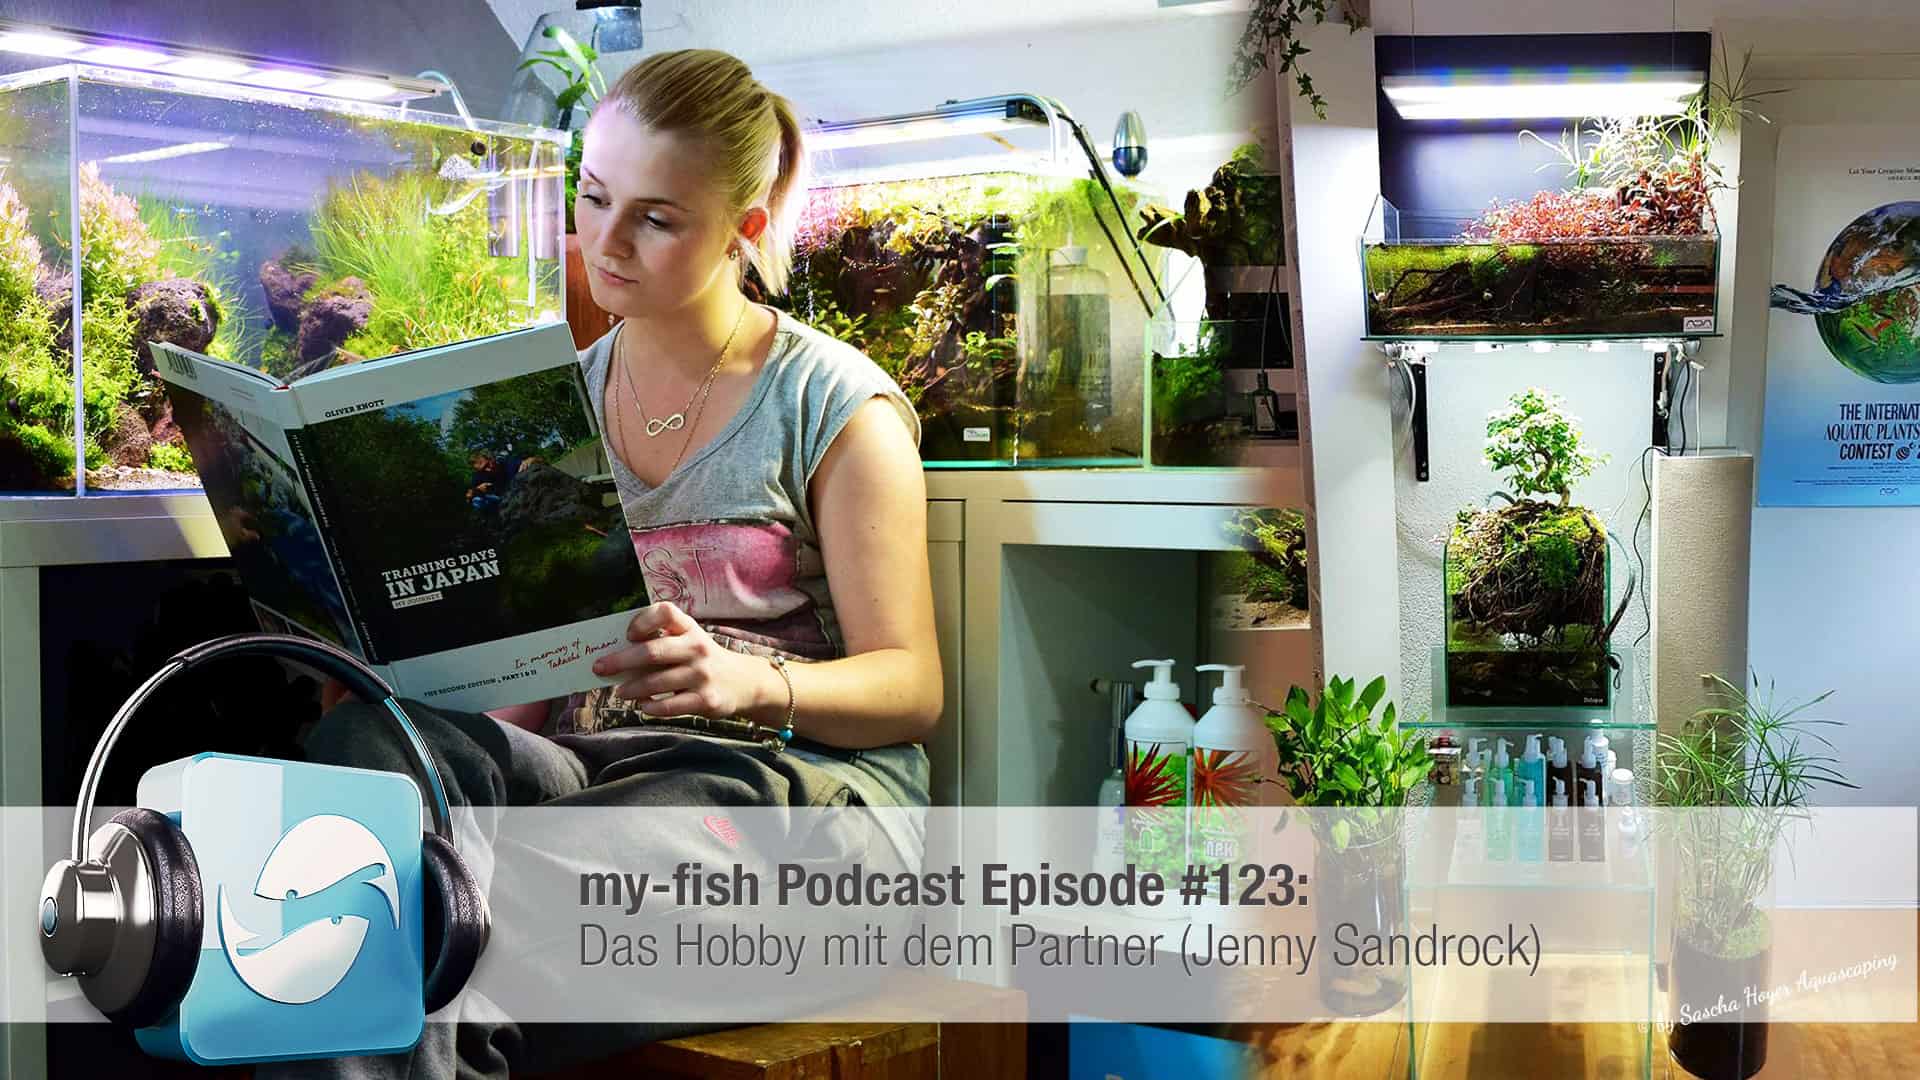 Podcast Episode #123: Das Hobby mit dem Partner (Jenny Sandrock)